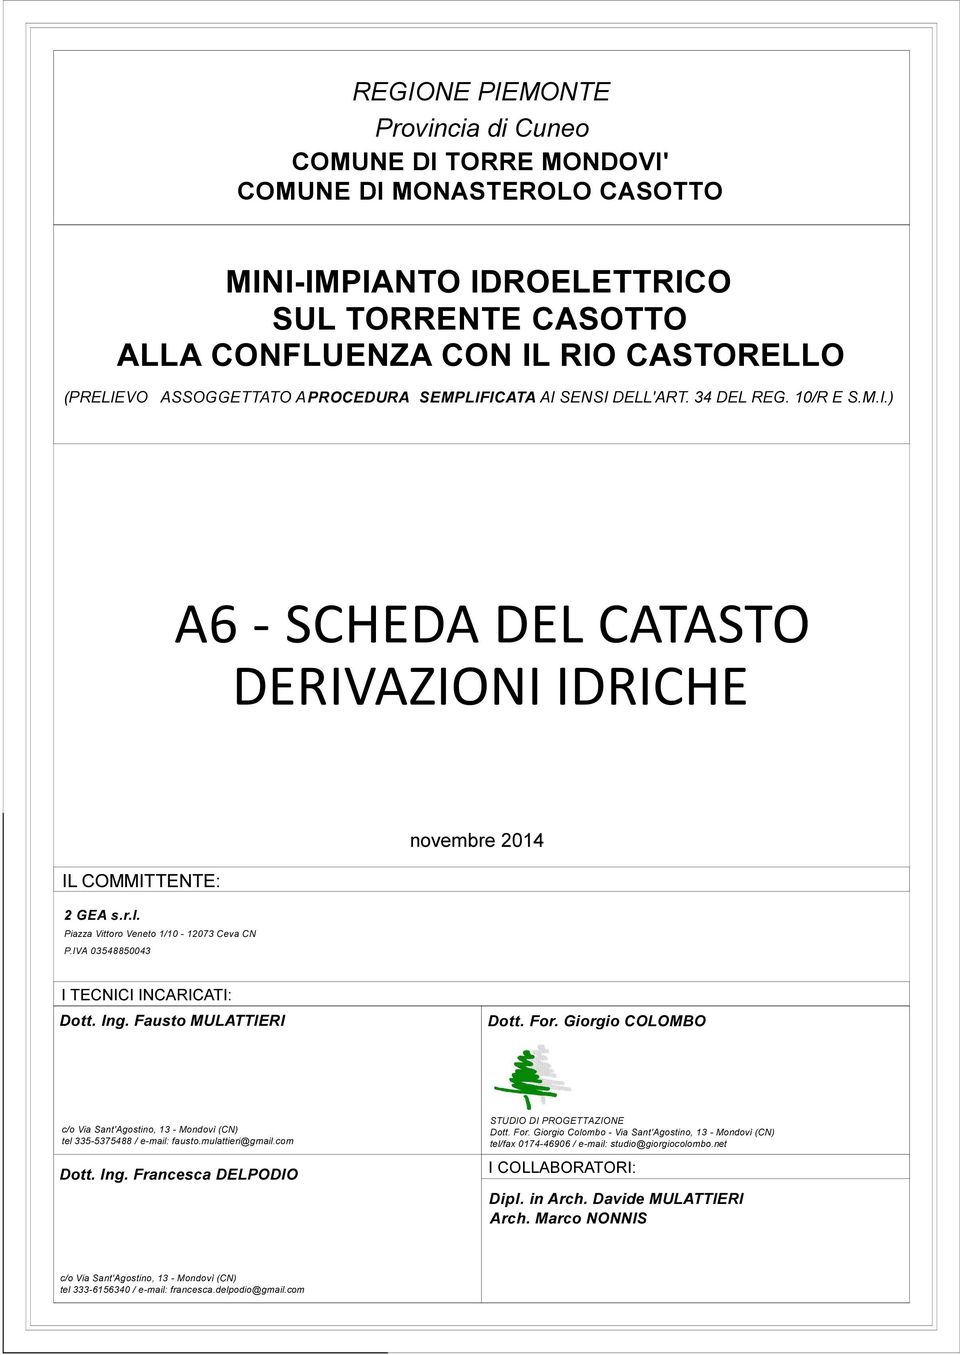 CN PIVA 03548850043 I TECNICI INCARICATI: Dott Ing Fausto MULATTIERI Dott For Giorgio COLOMBO co Via Sant'Agostino 13 - Mondovì (CN) tel 335-5375488 e-mail: faustomulattieri@gmailcom Dott Ing